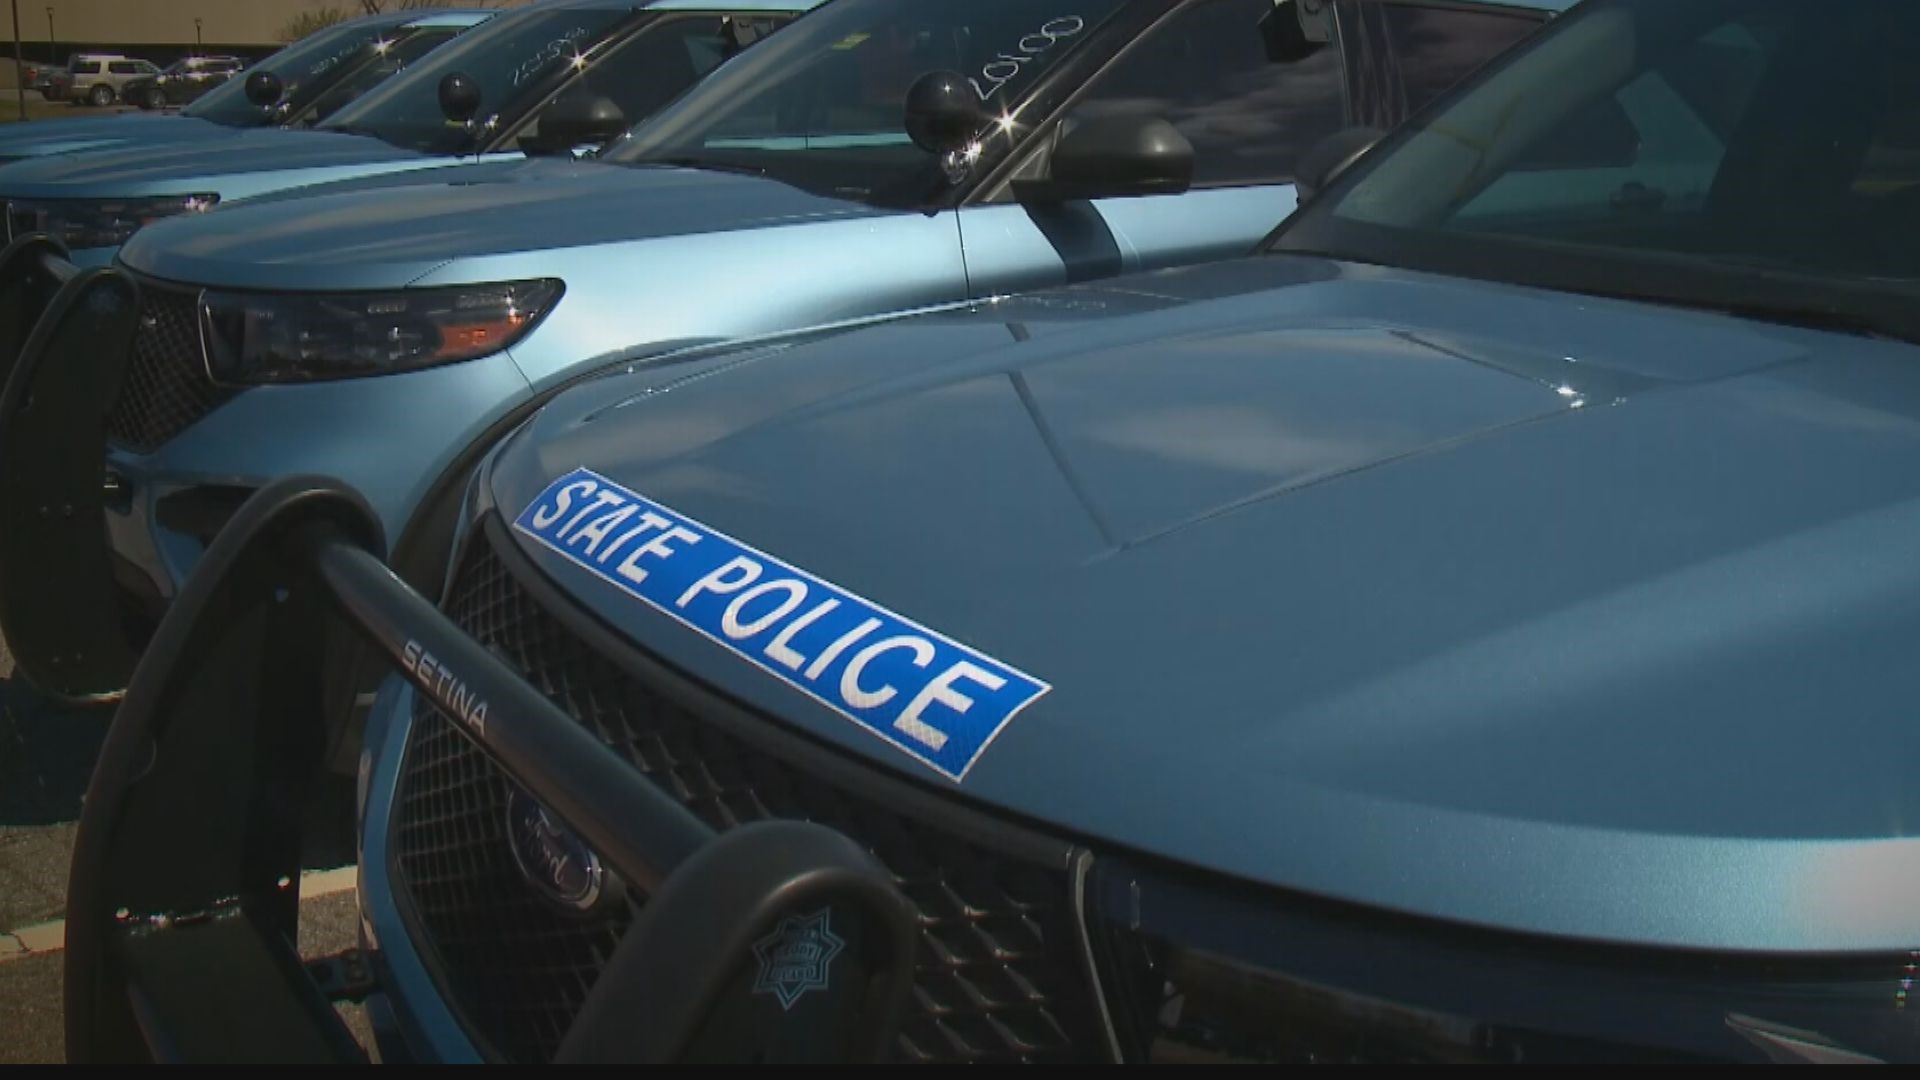 Police Oklahoma fugitives arrested in Hollis, Maine newscentermaine